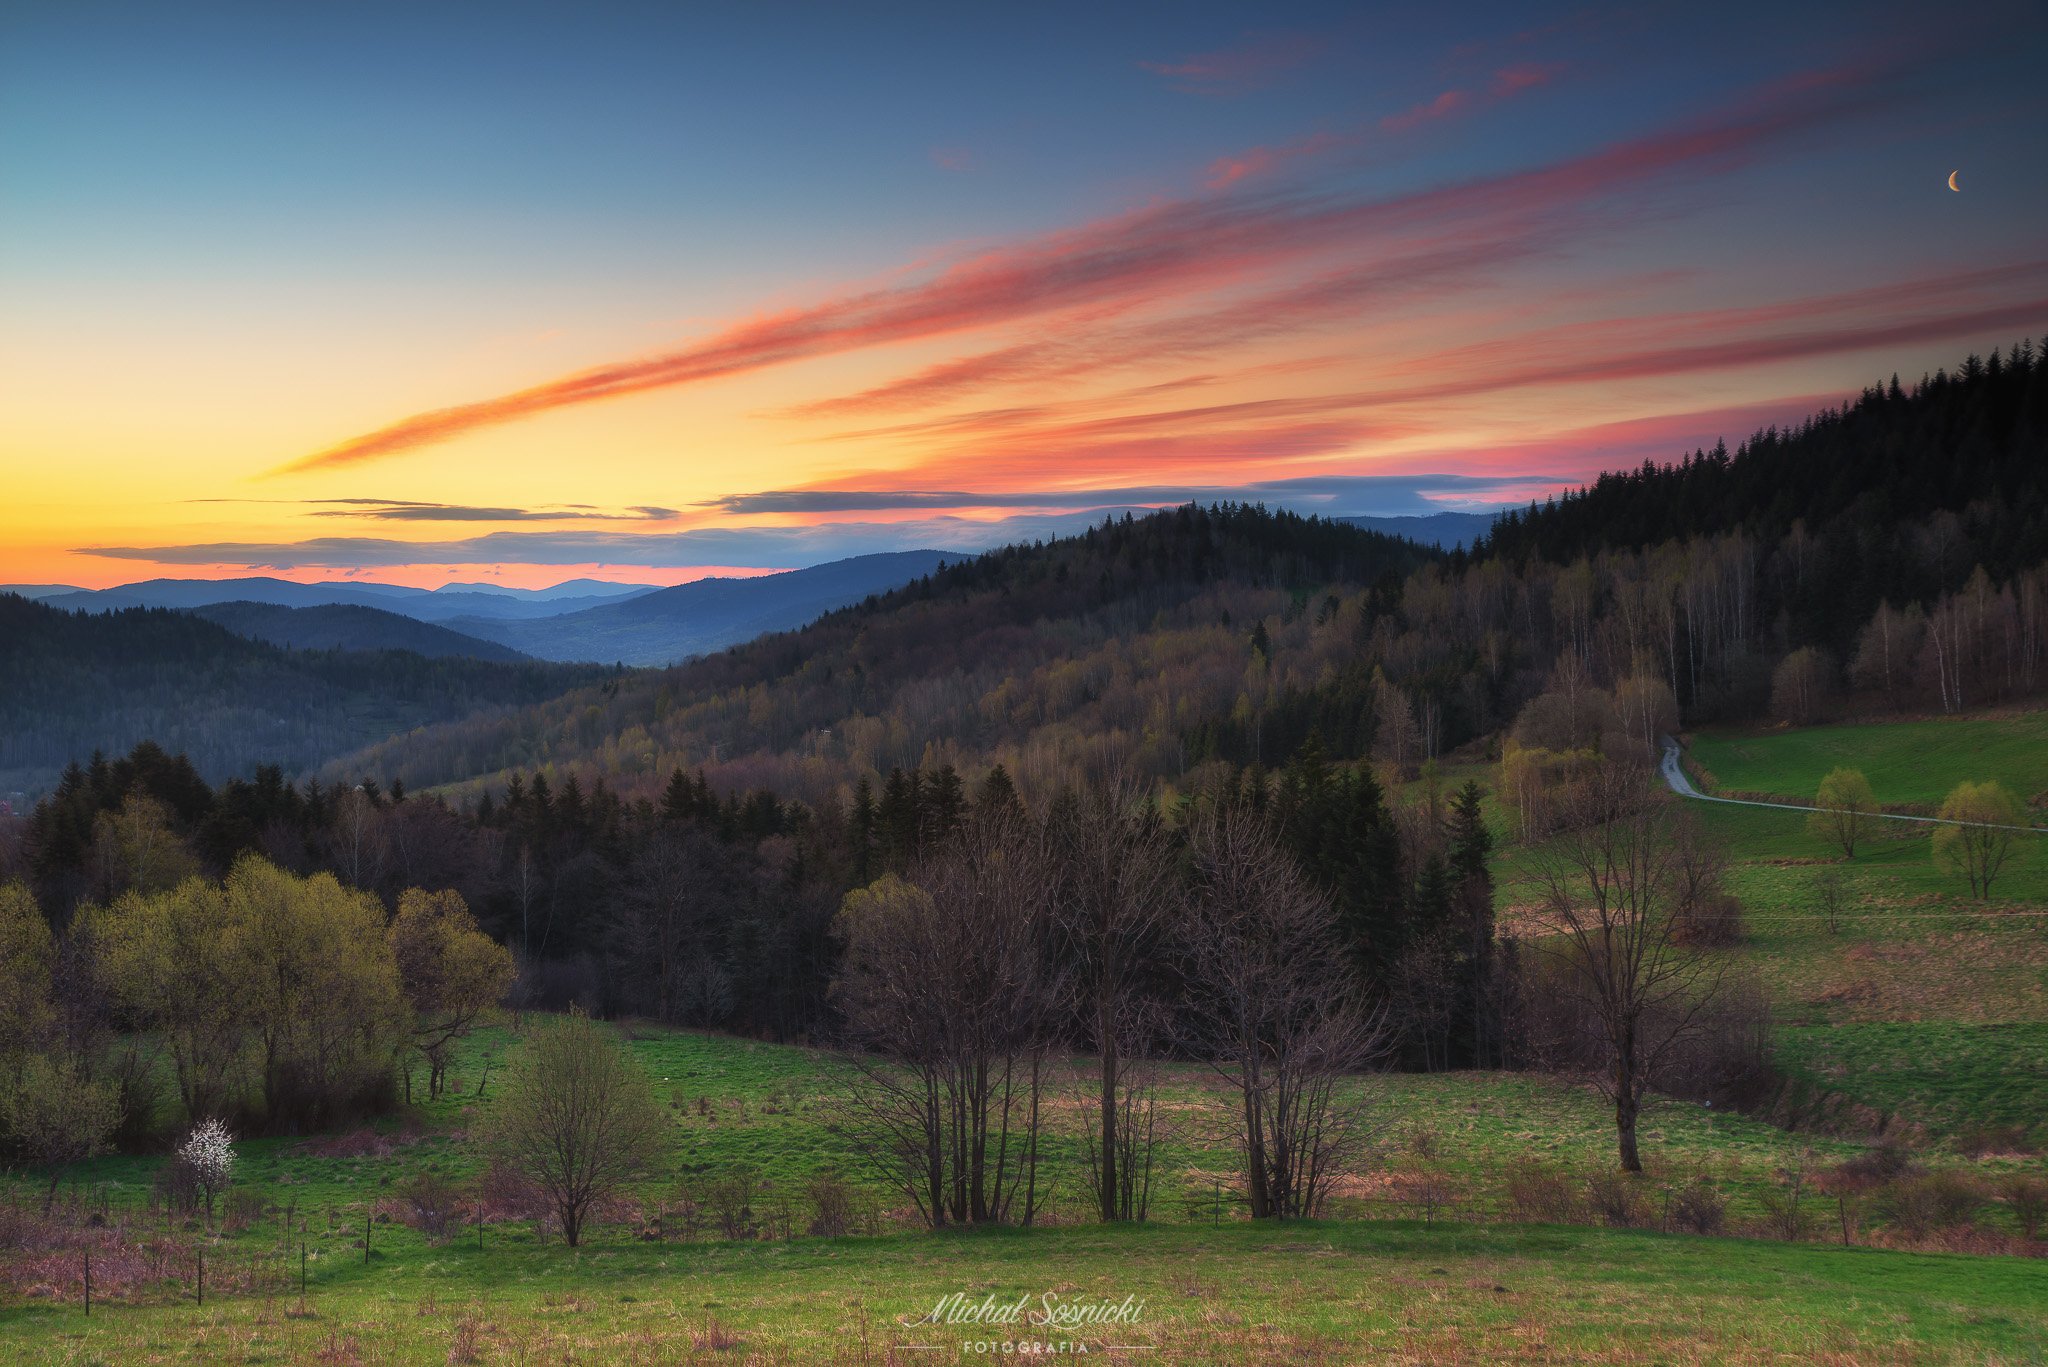 #zawoja #poland #spring #sunrise #sky #nature #landscape #benro #pentax, Michał Sośnicki